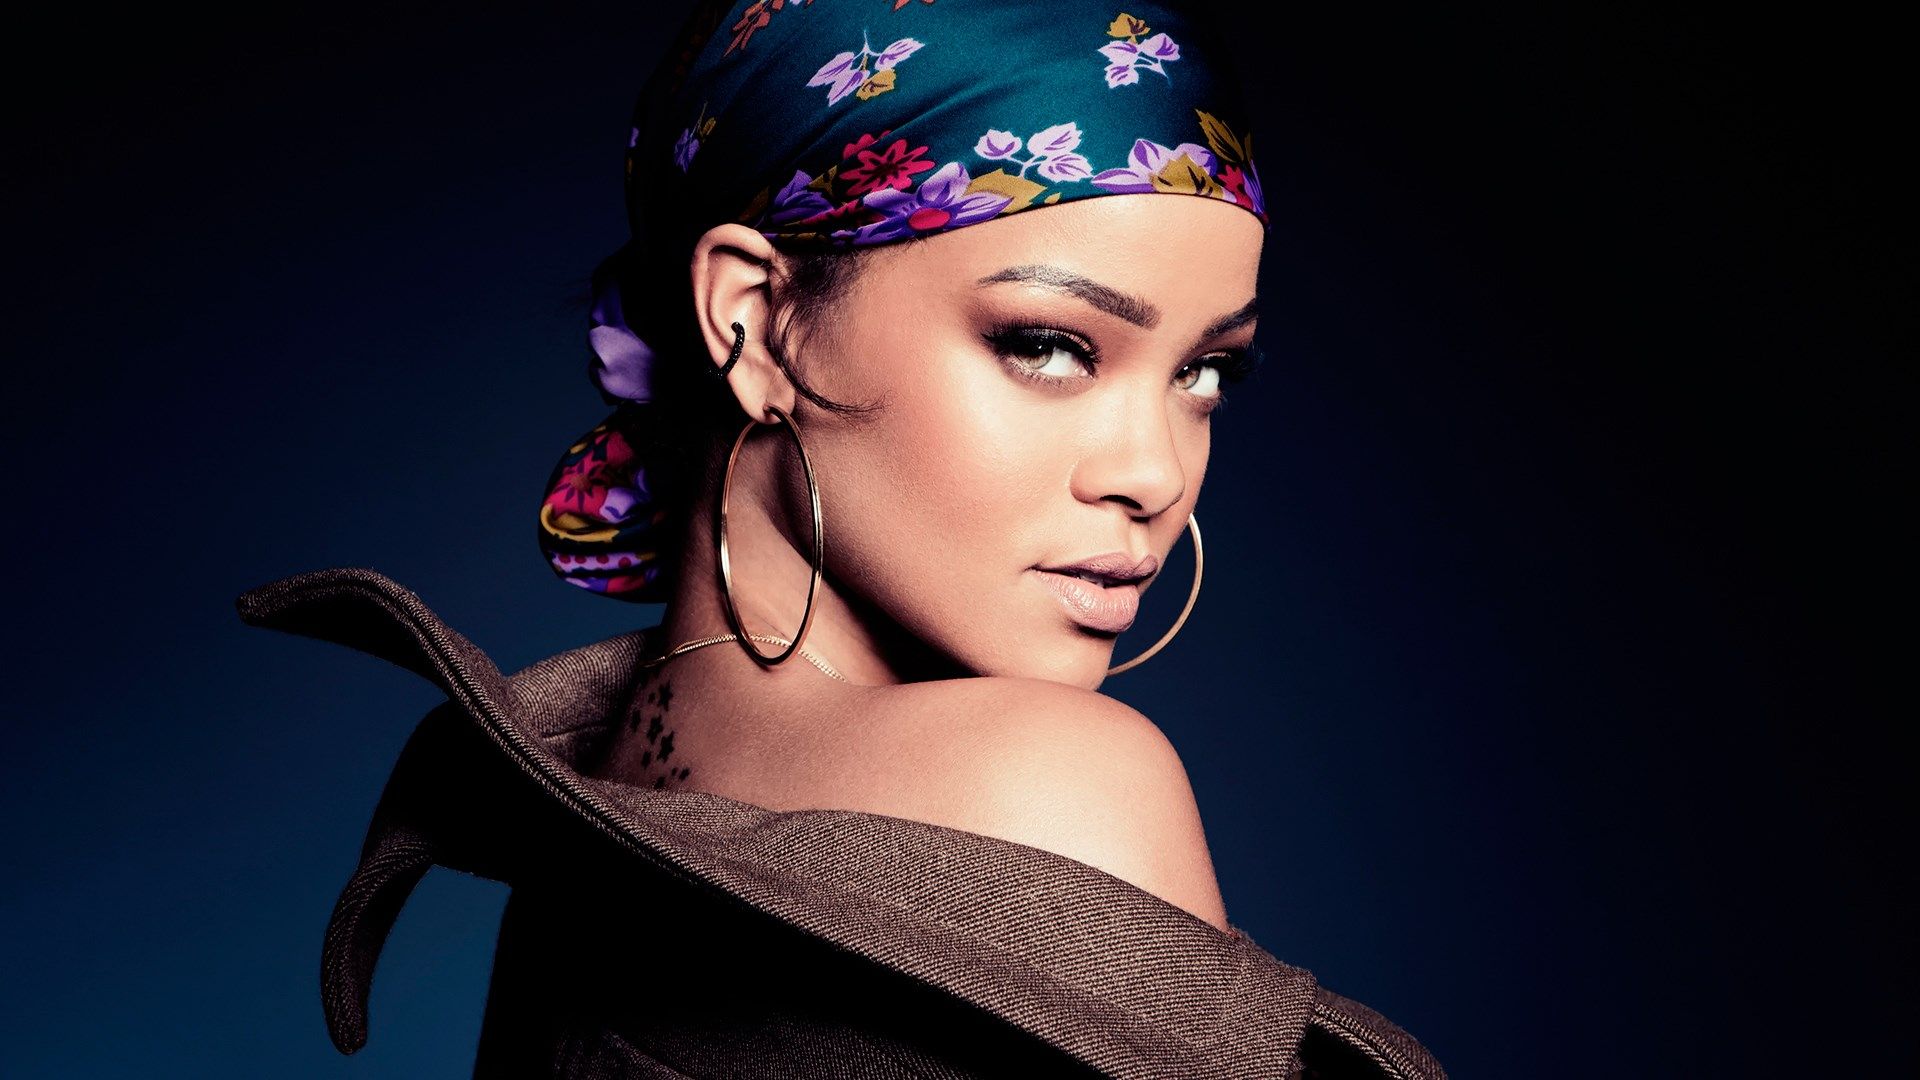 A woman with an earring and headband - Rihanna